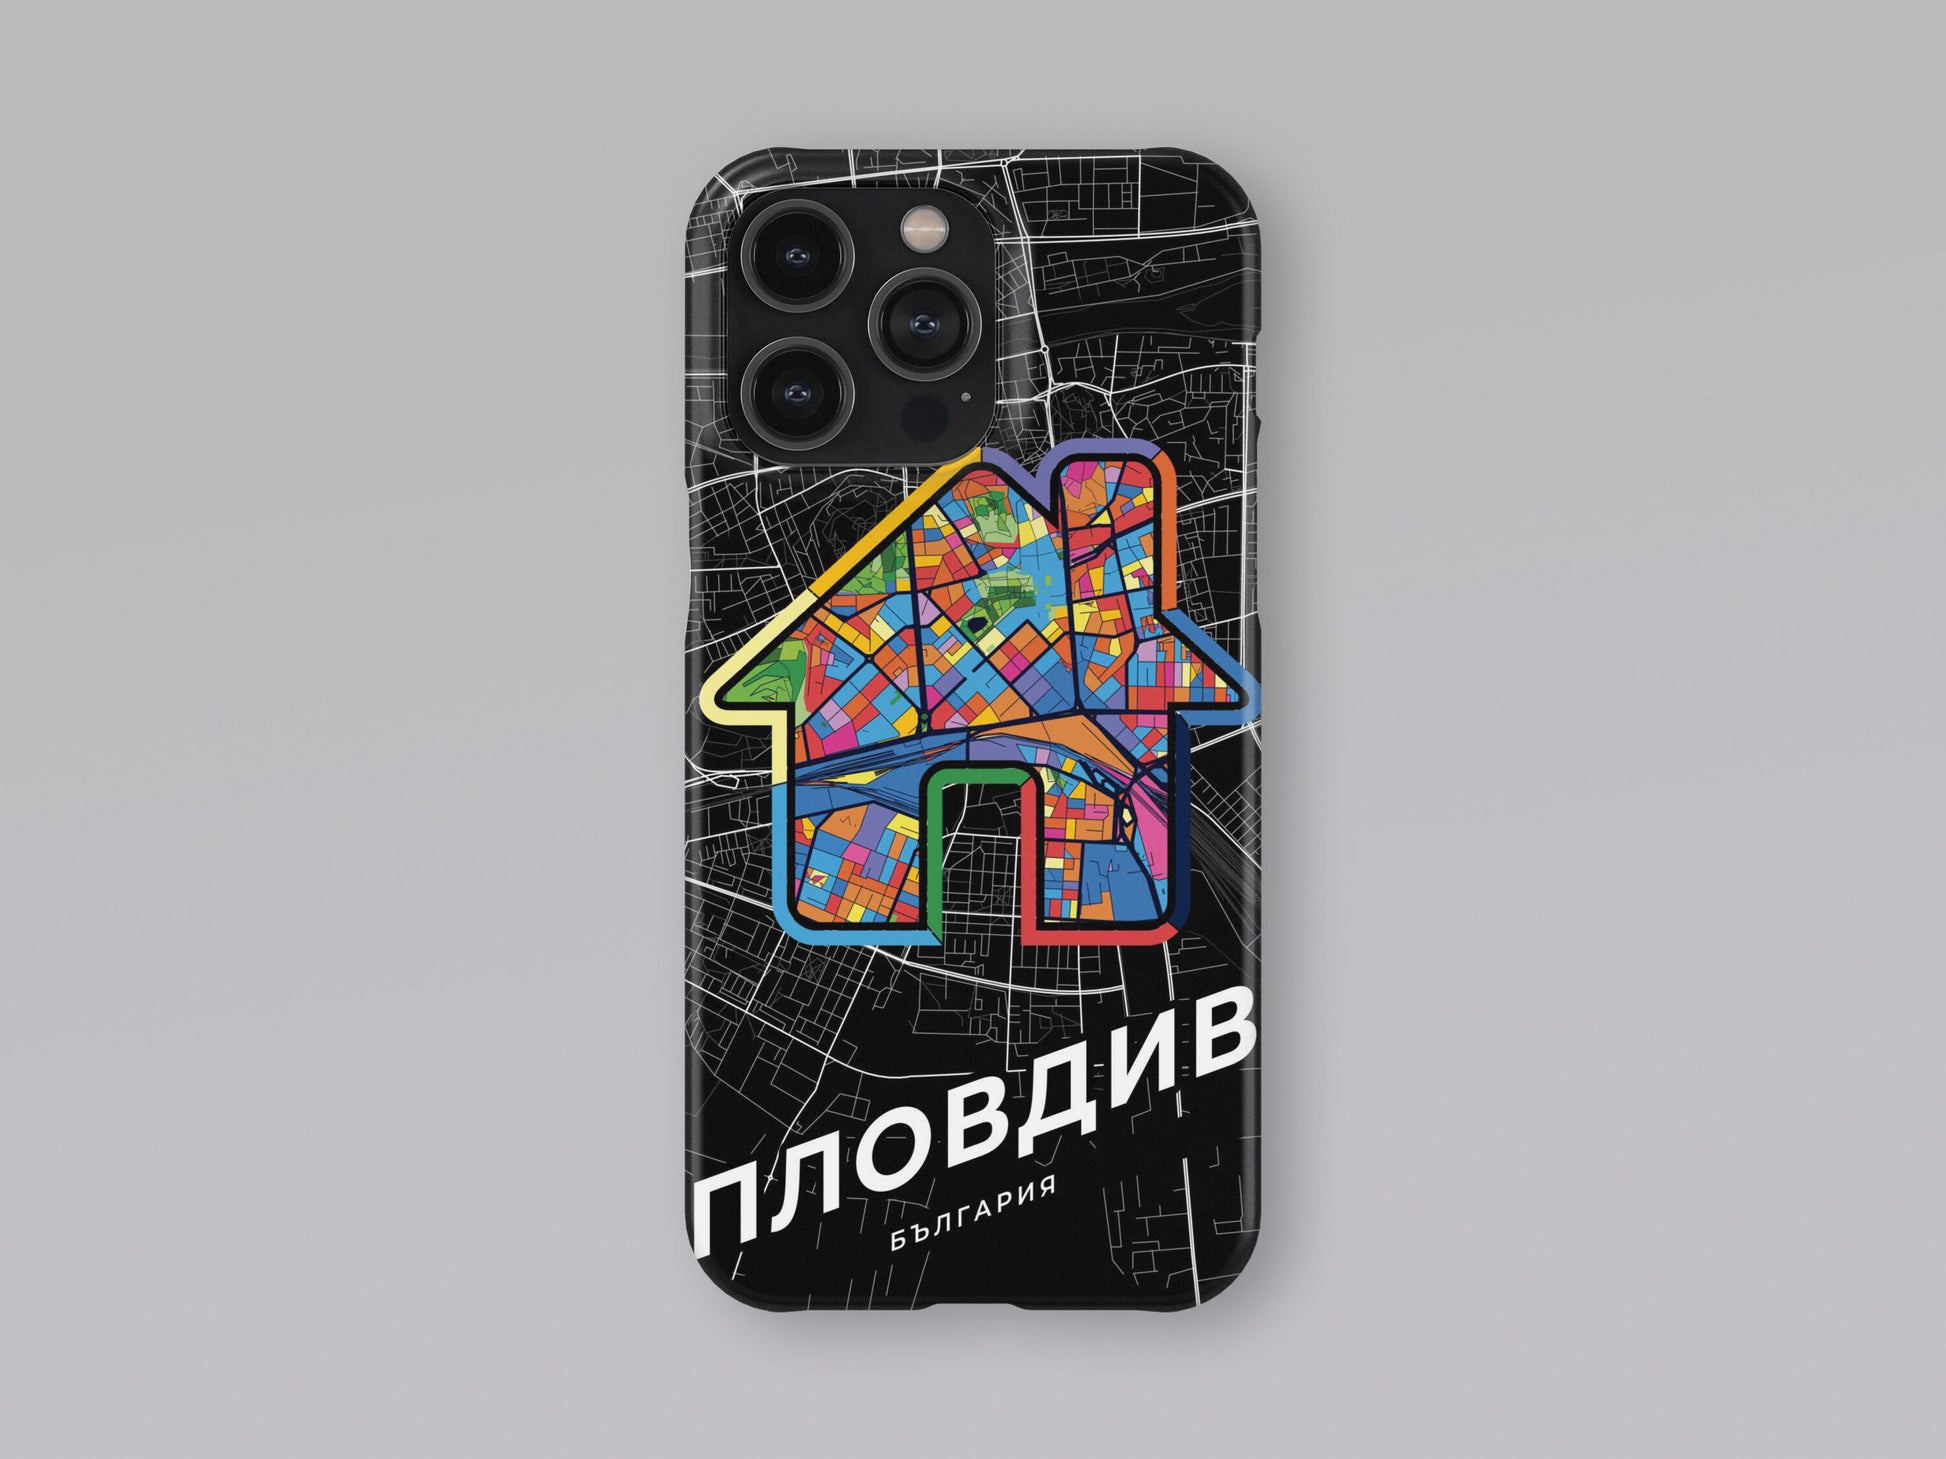 Пловдив България slim phone case with colorful icon 3